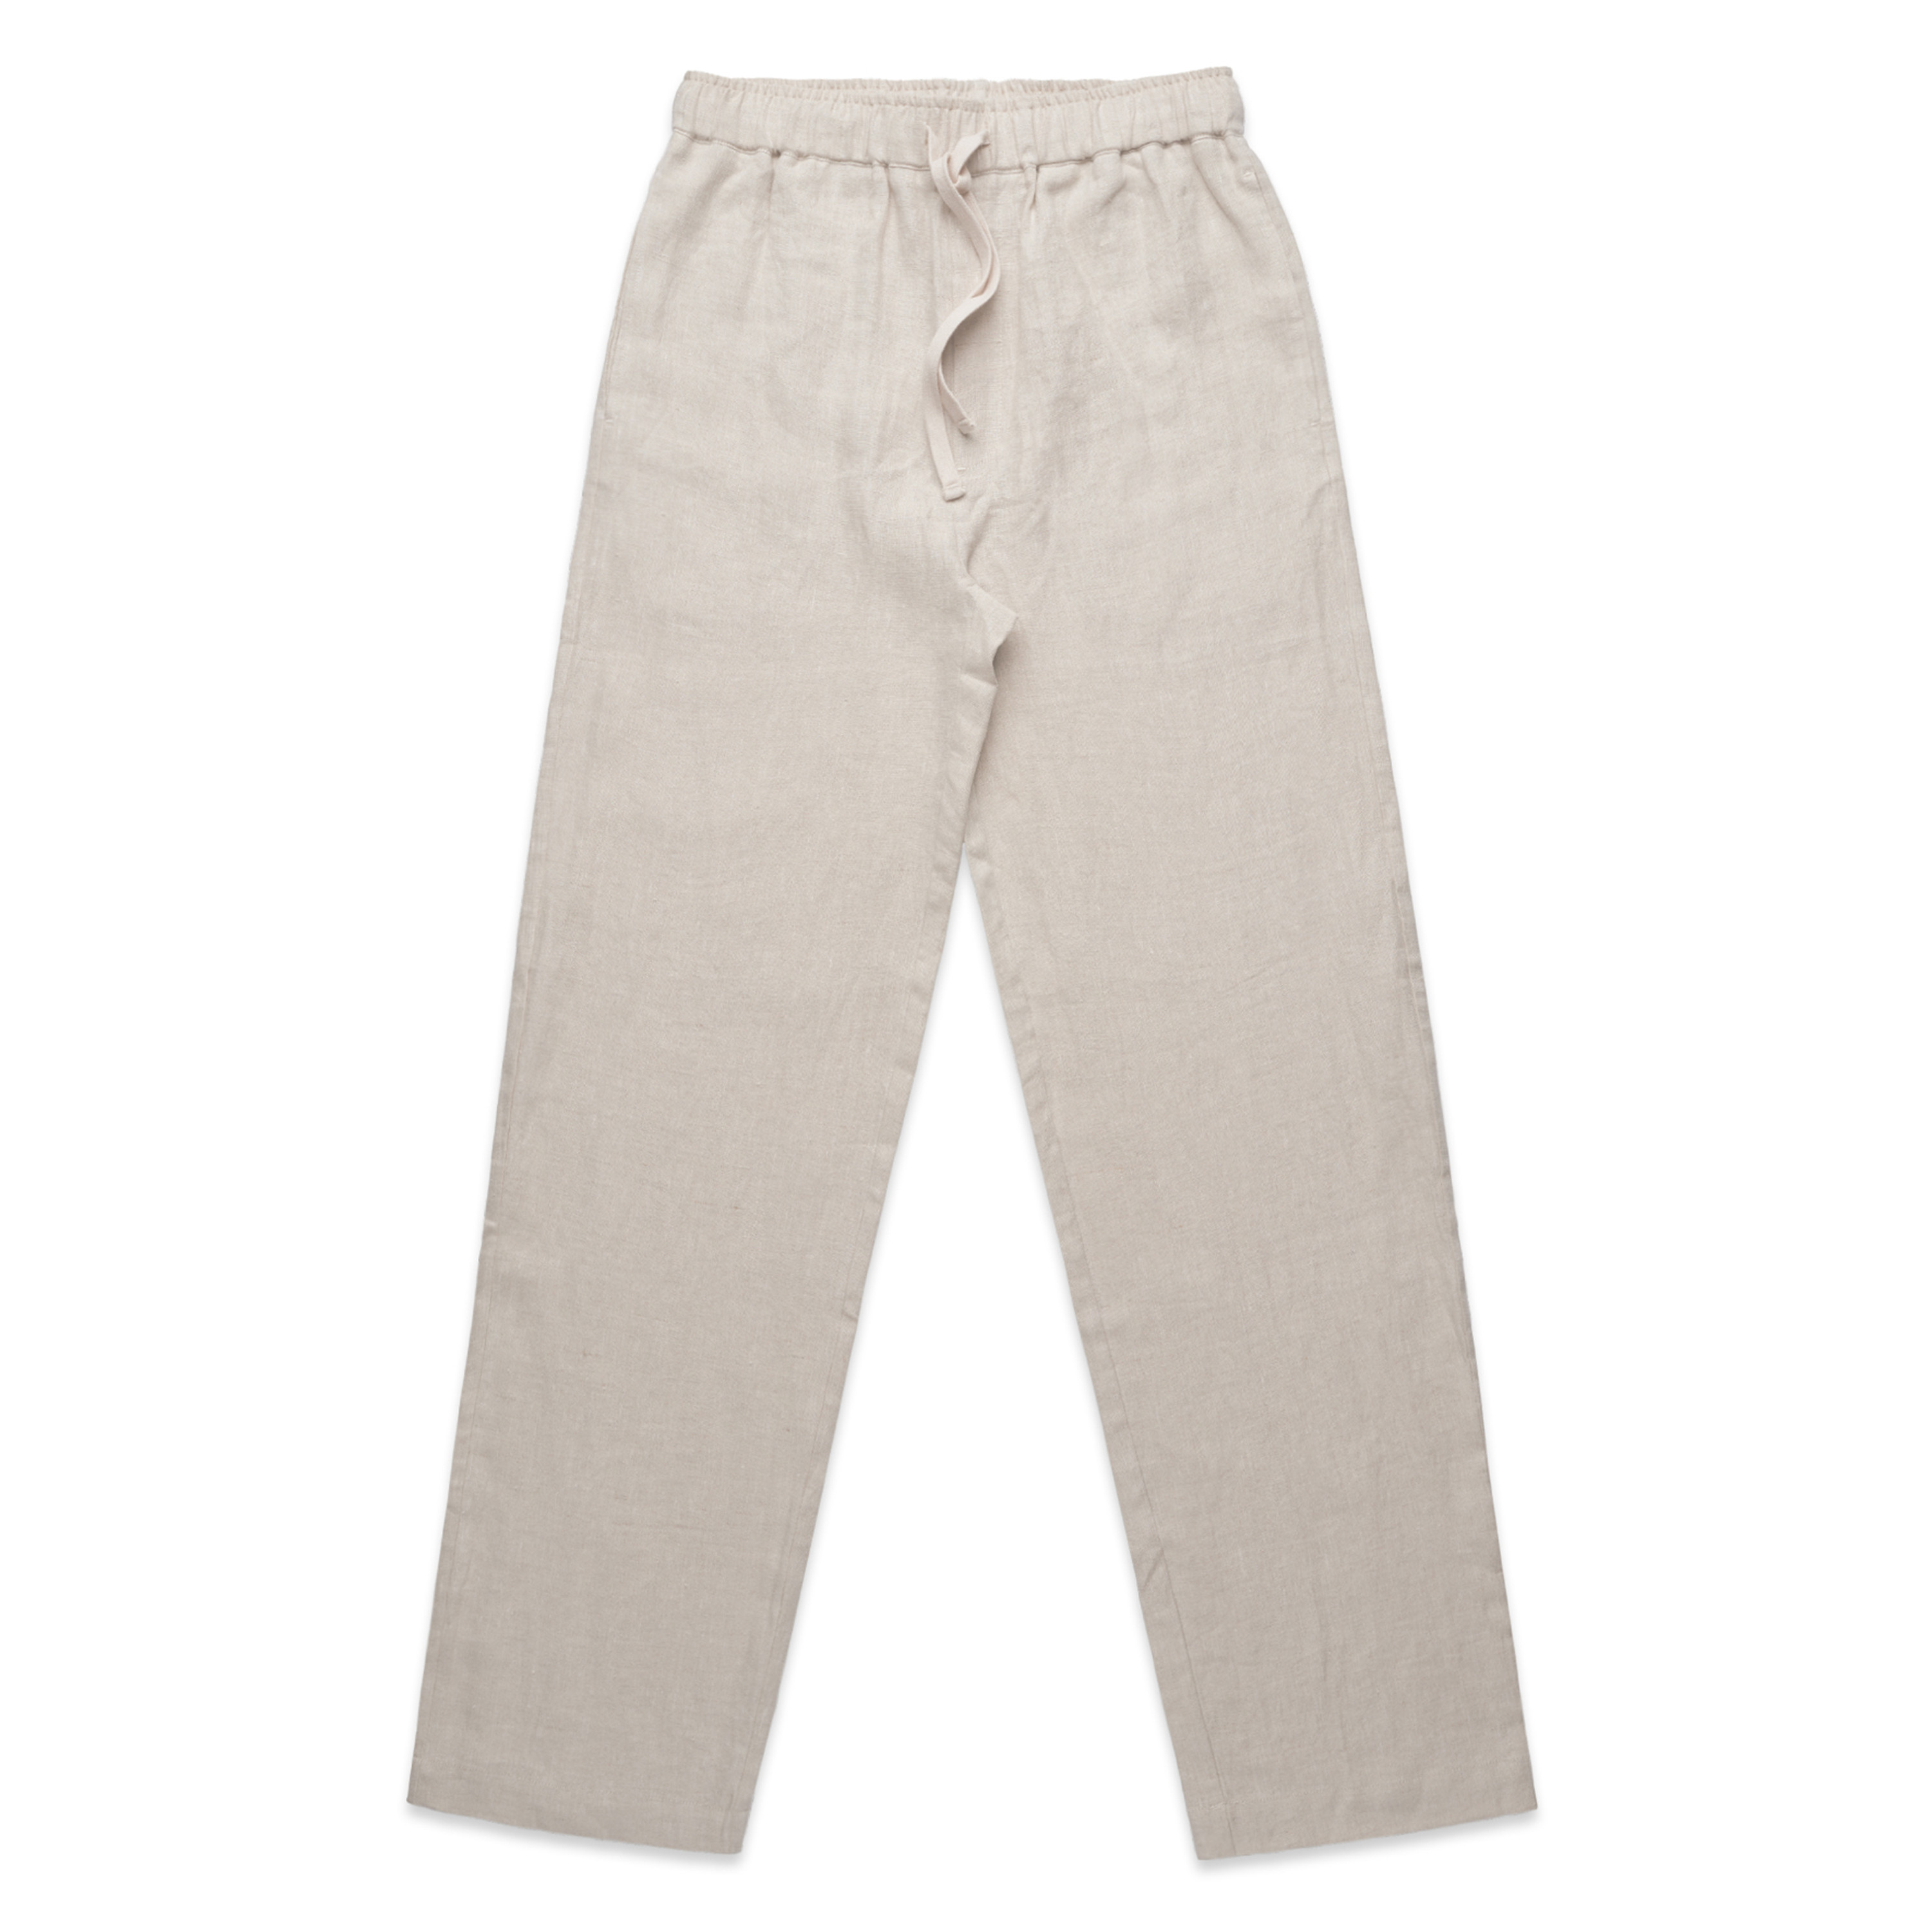 Wo's Linen Pants - 4922